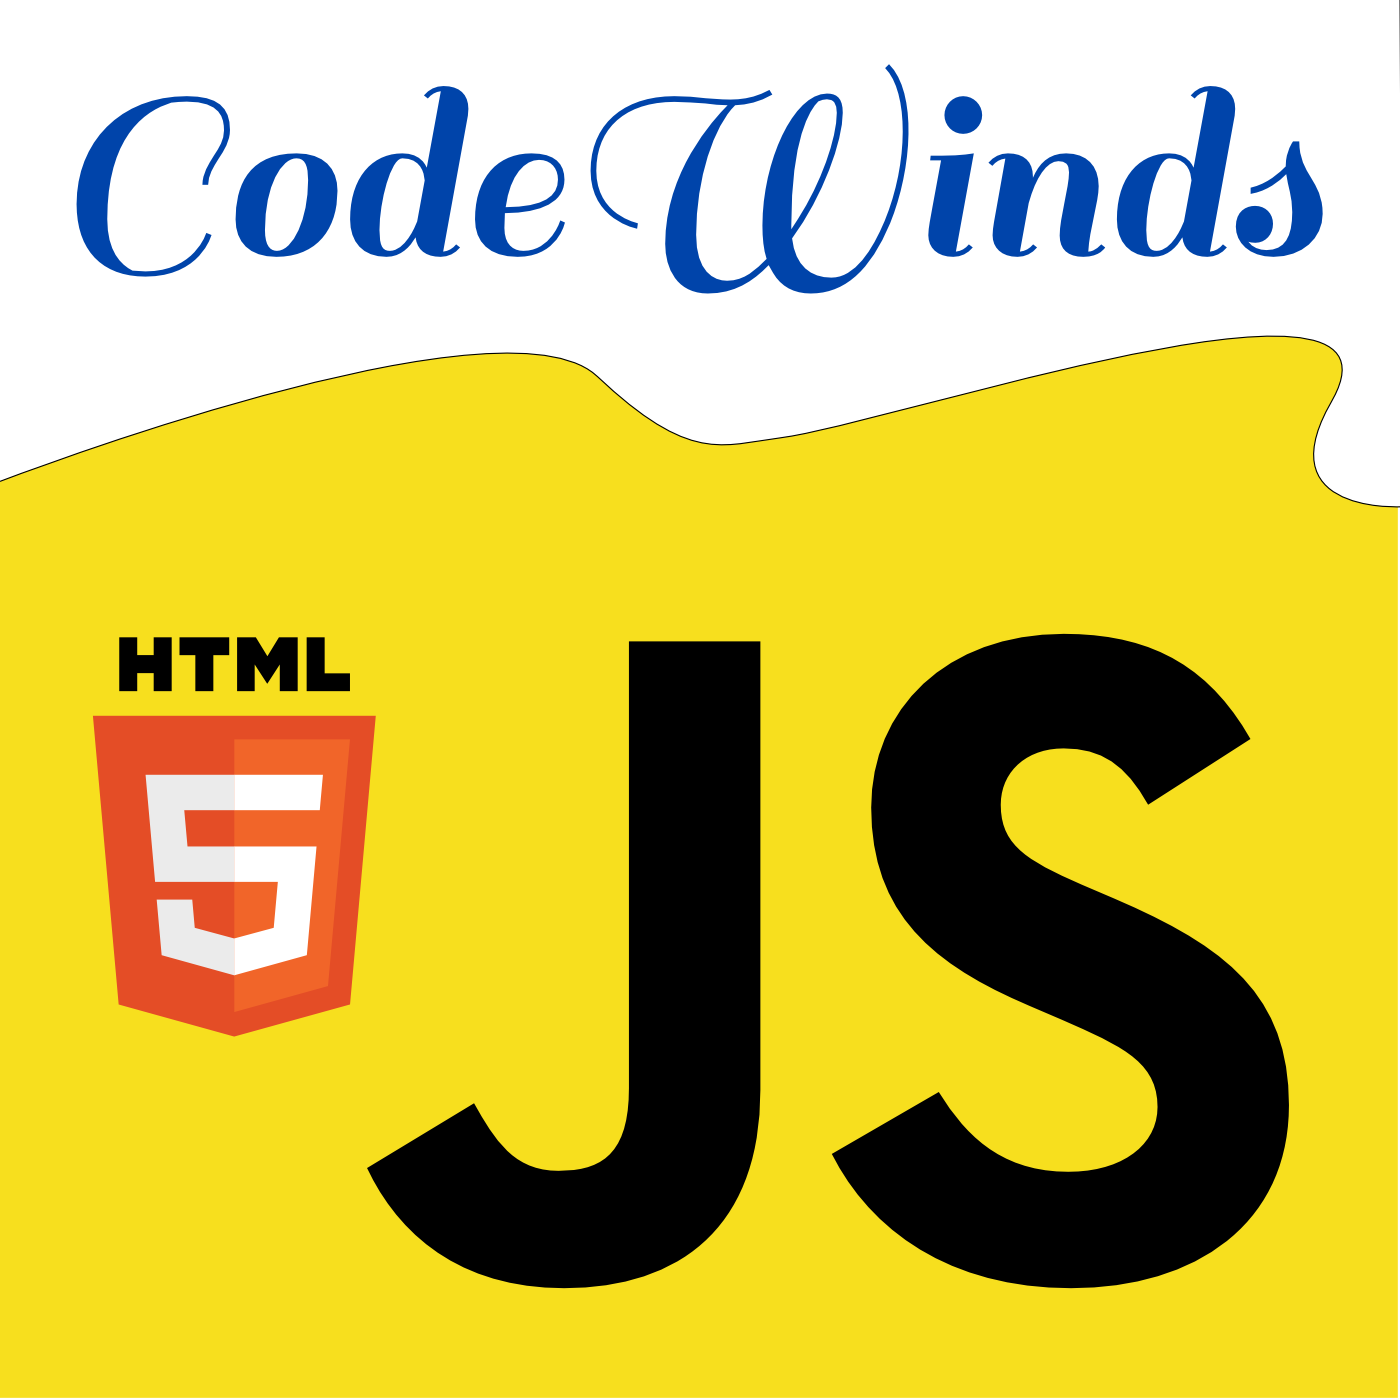 CodeWinds - Leading edge web developer news and training | javascript / React.js / Node.js / HTML5 / web development - Jeff Barczewski